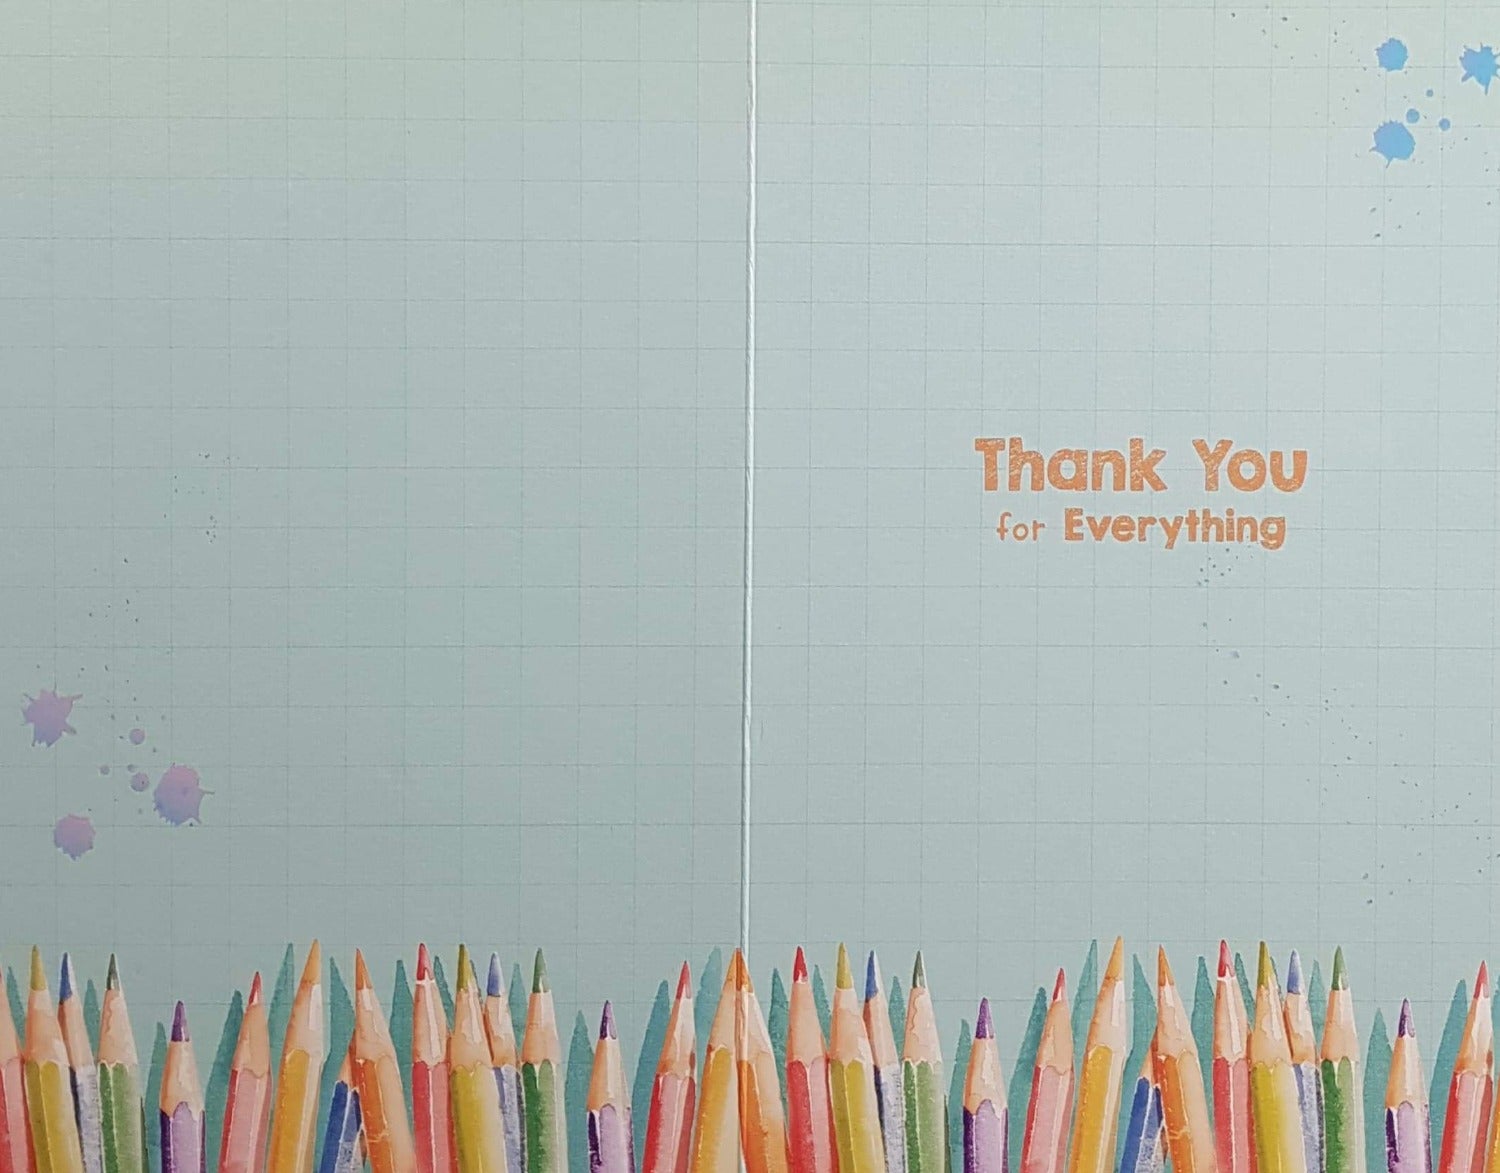 Thank You Card - Teacher / Stars & Crayons